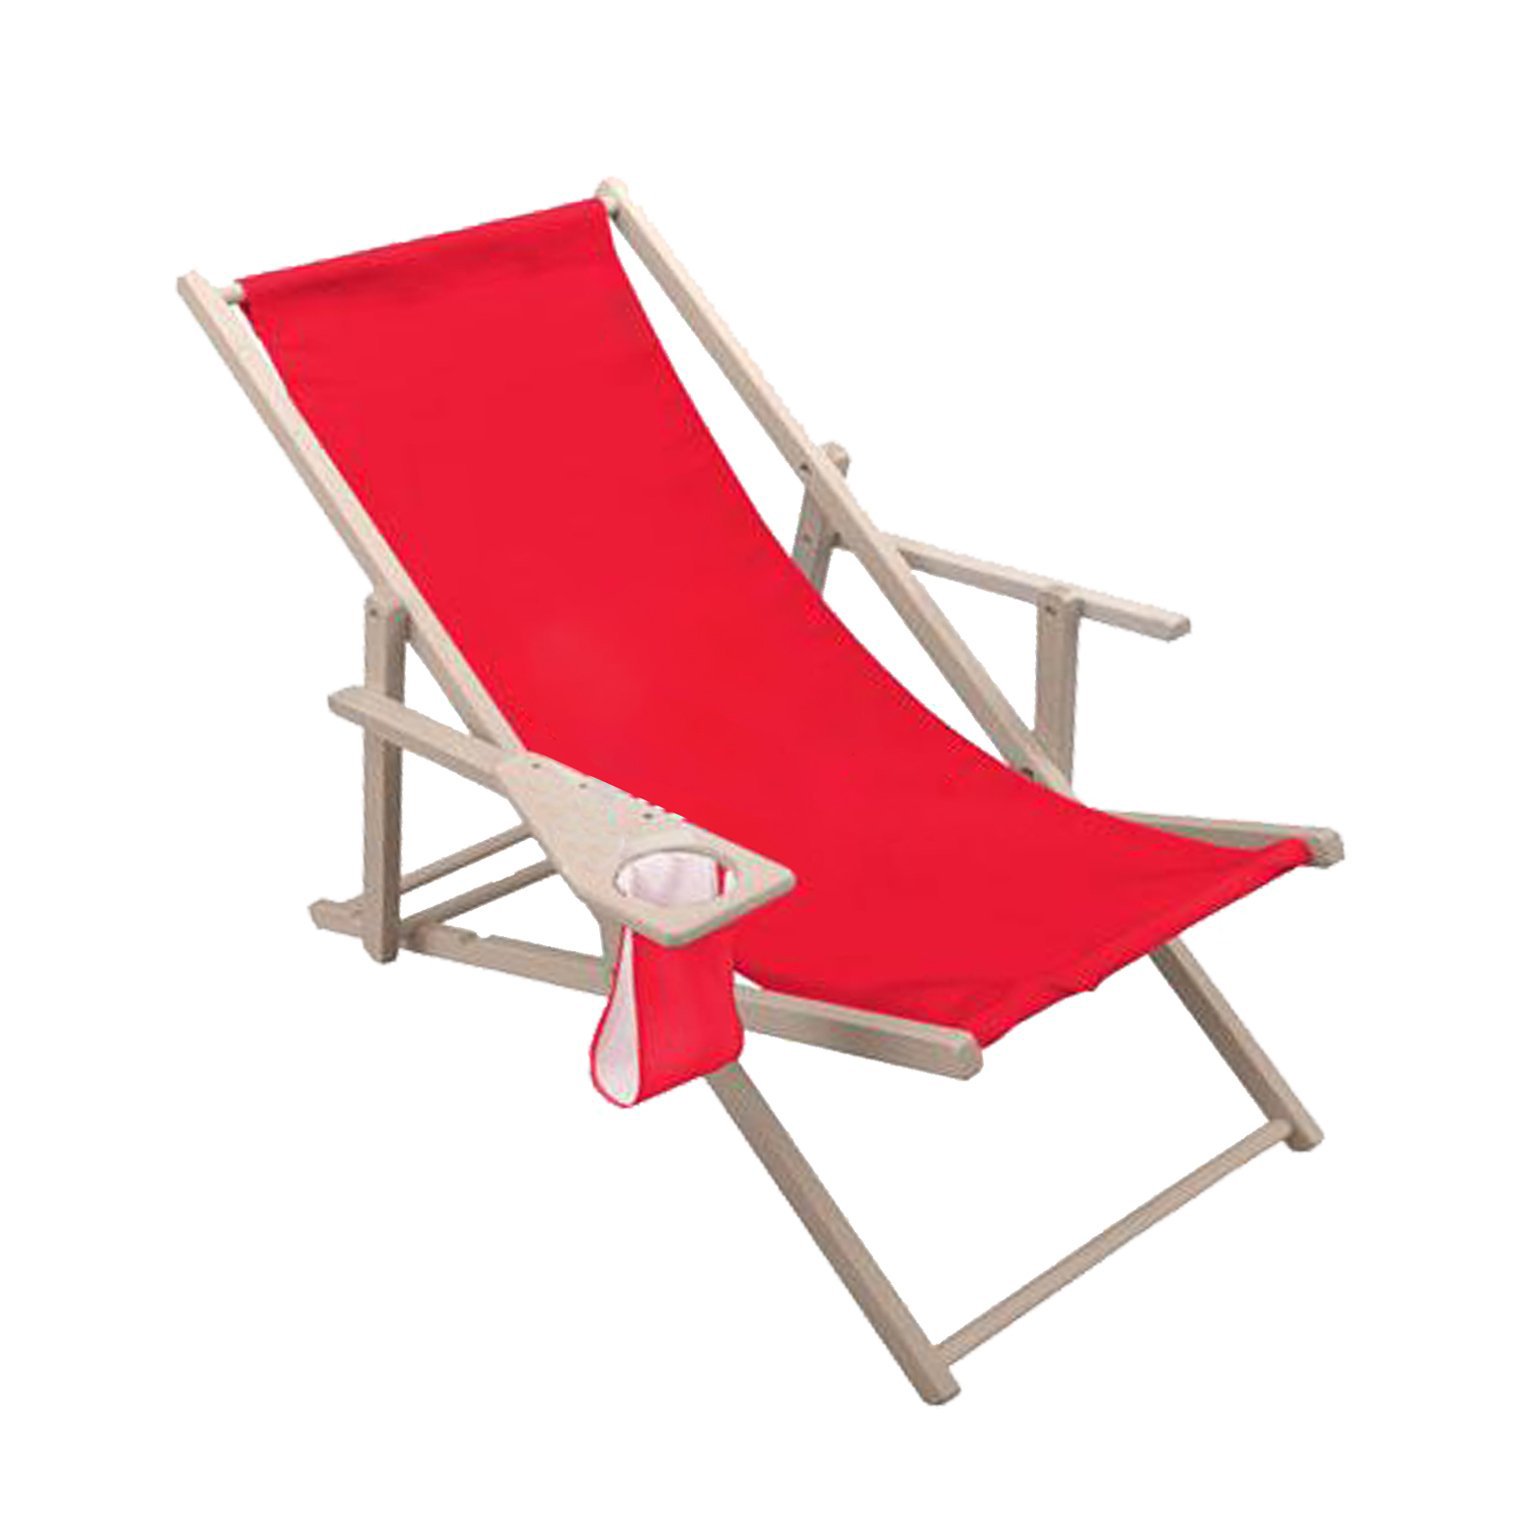 Comfort drink deckchair with armrest & cup holder